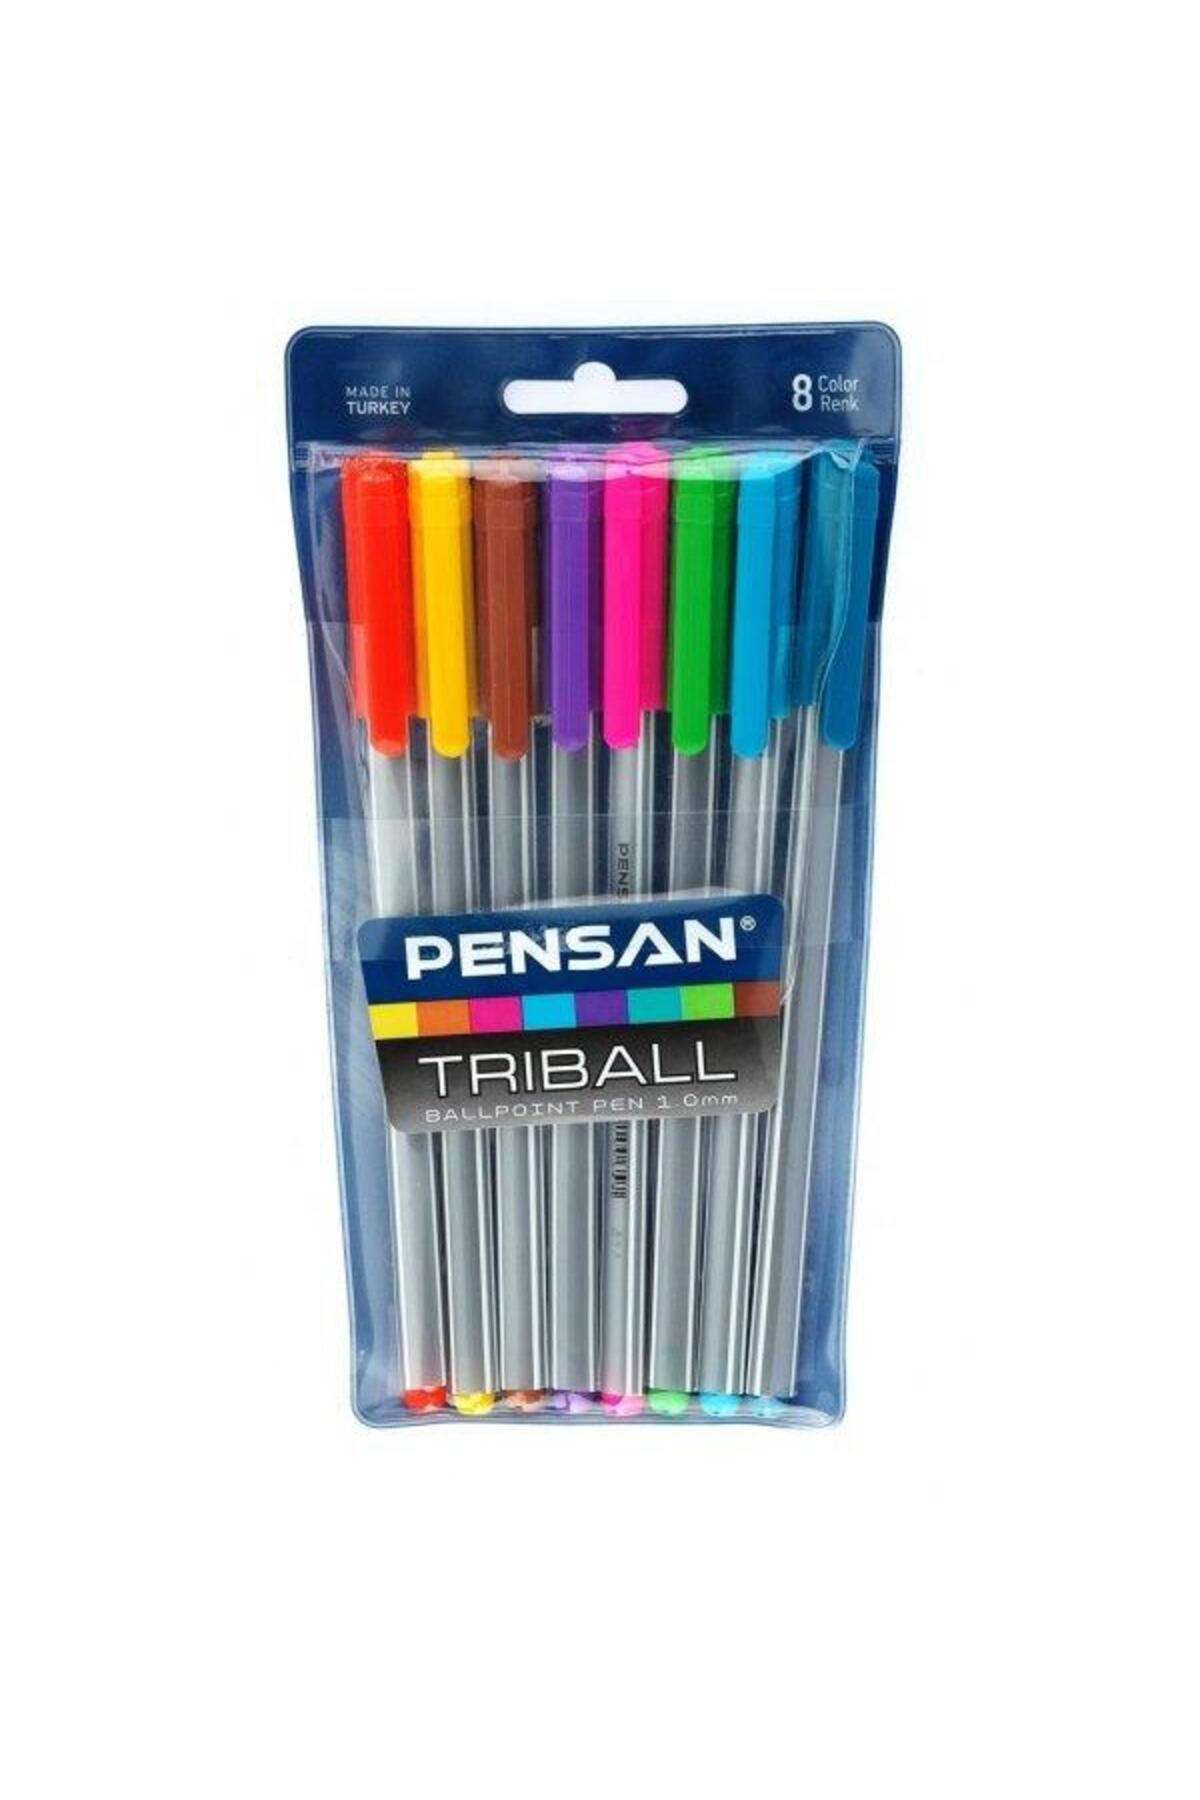 Pensan Trıball ballpoint pen